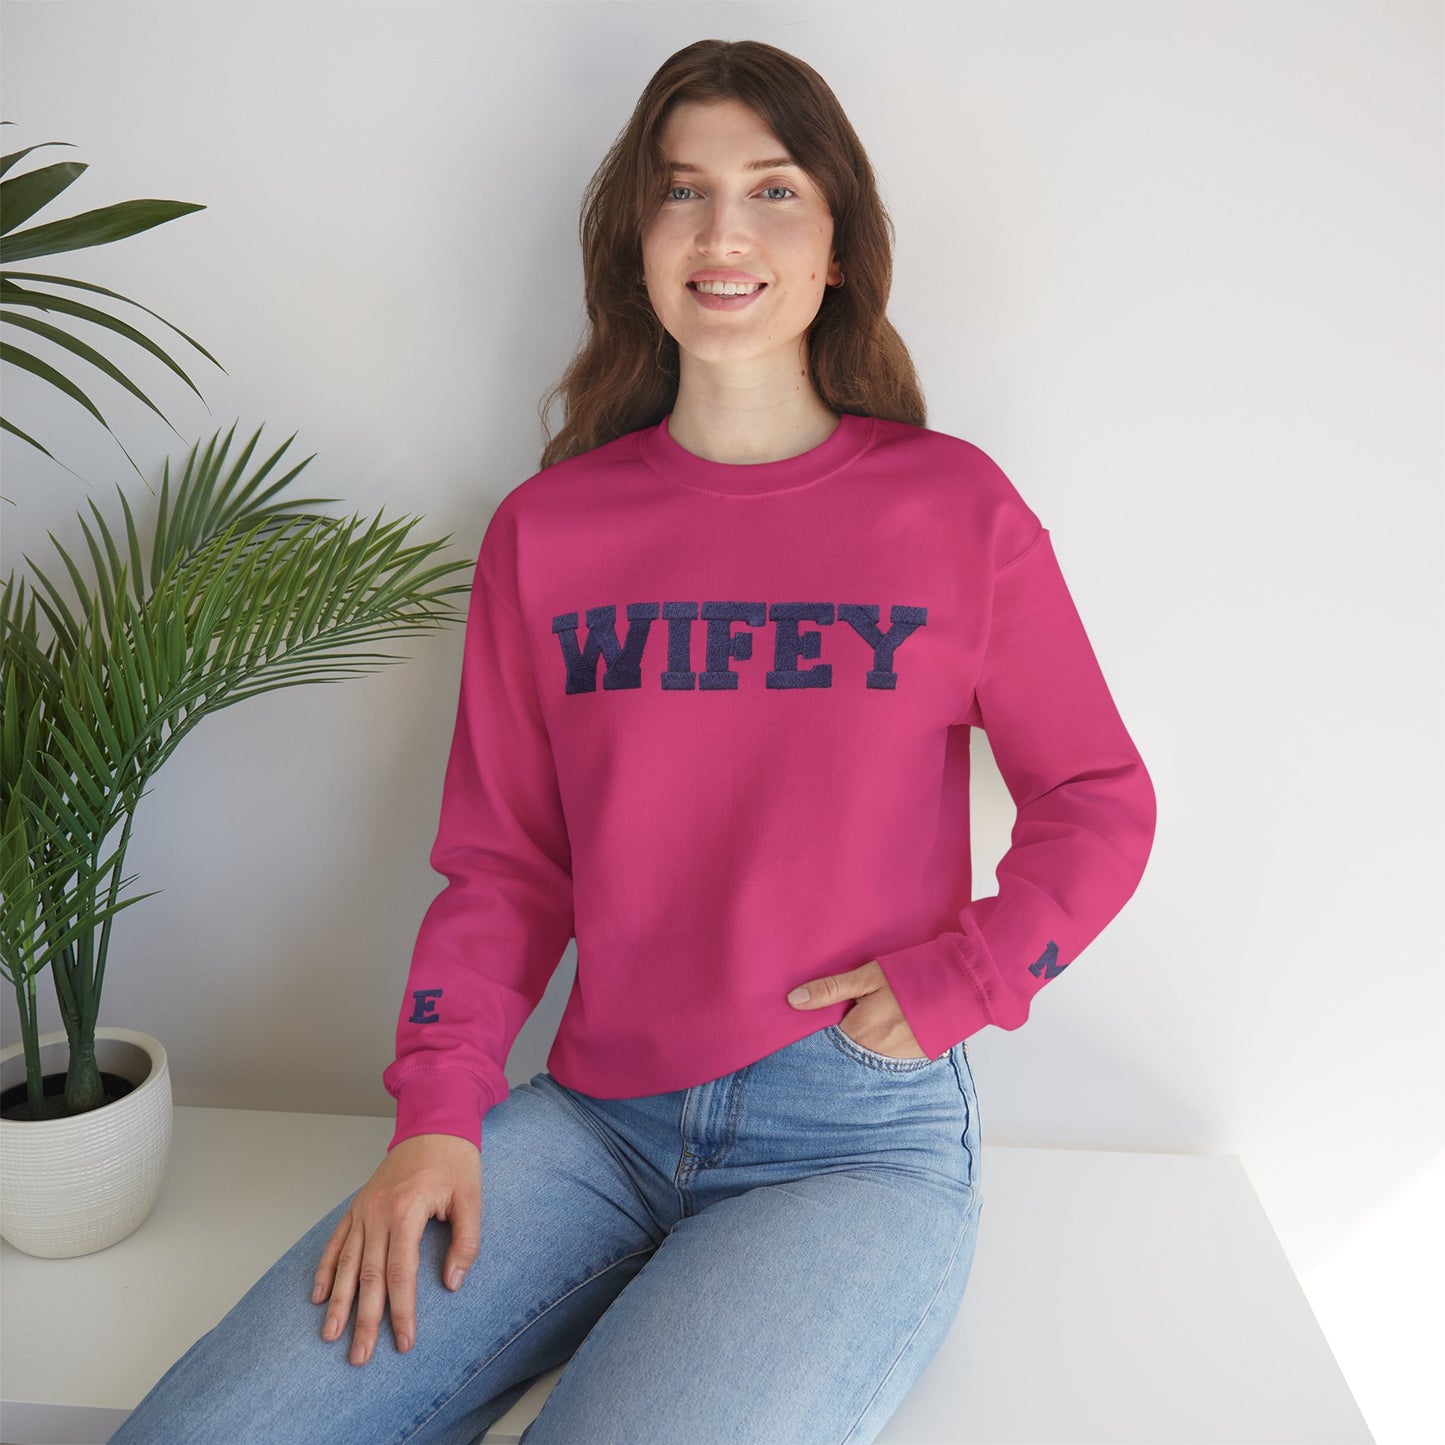 Wifey Sweatshirt With Personalized Initials On Sleeves Sweatshirt Brides by Emilia Milan 